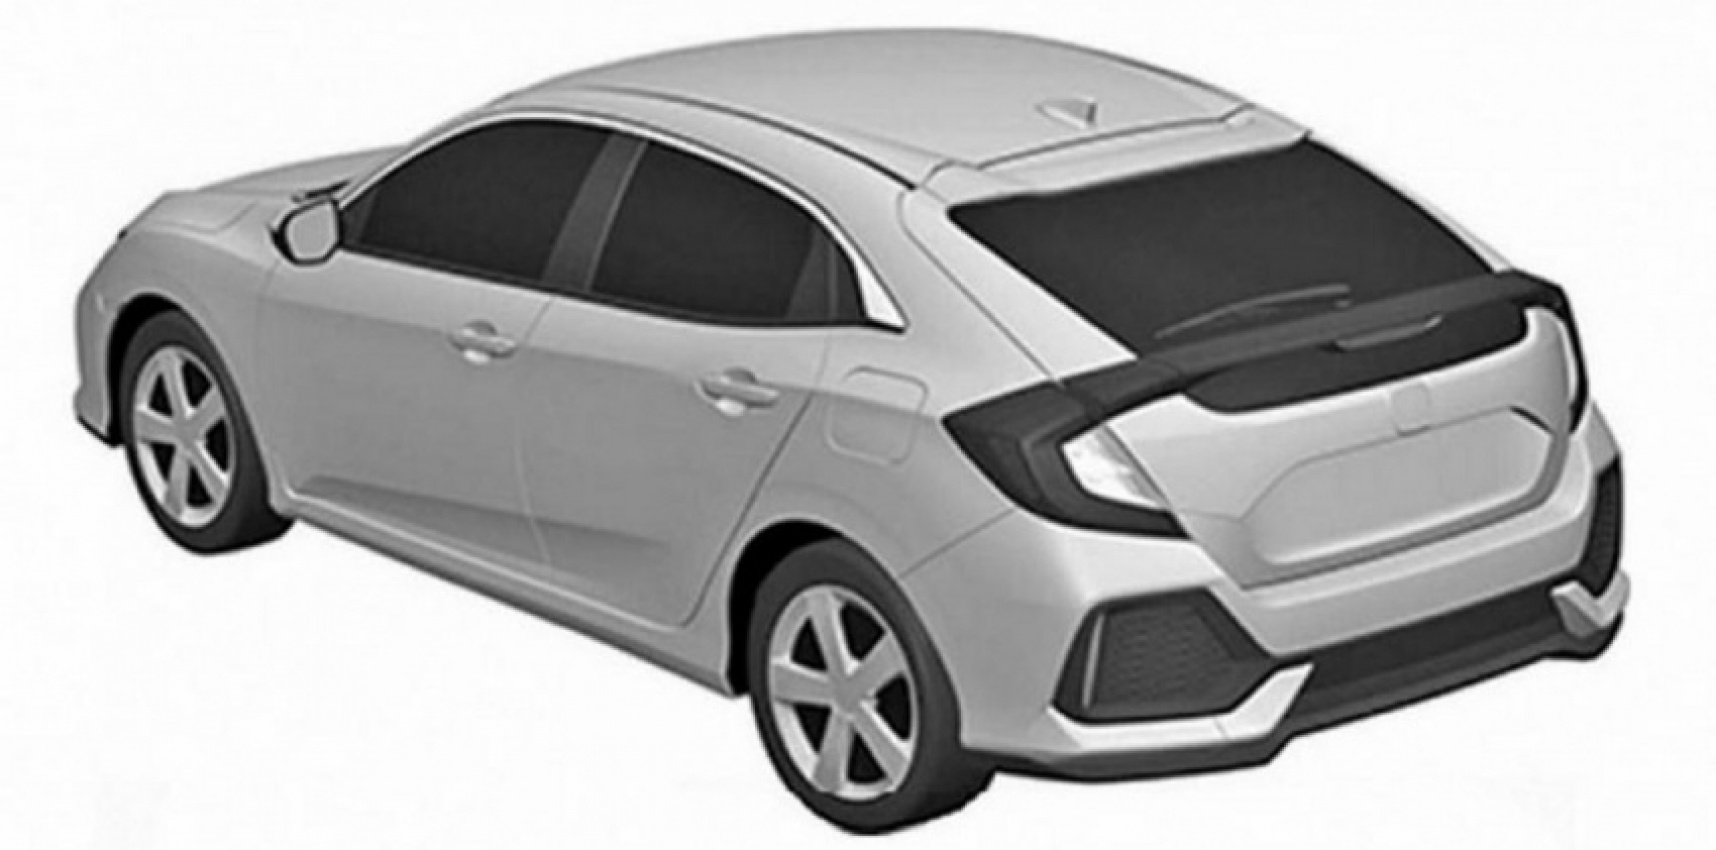 autos, car brands, cars, honda, honda civic, patent images show off 2017 honda civic hatchback